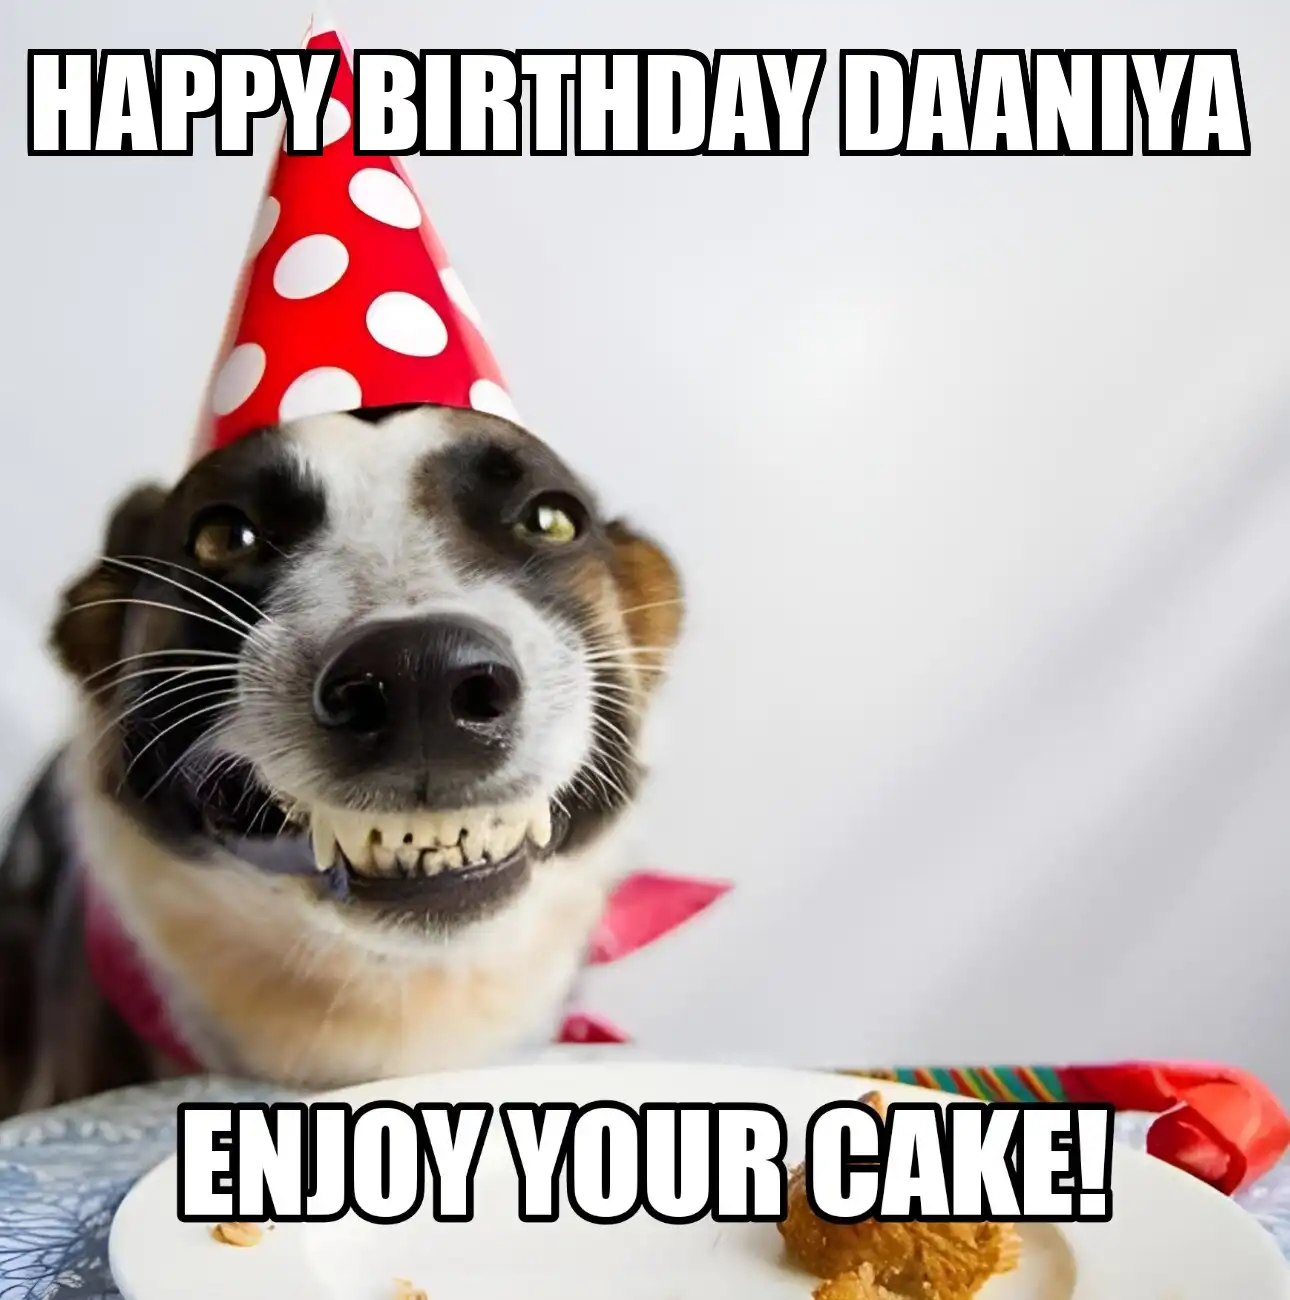 Happy Birthday Daaniya Enjoy Your Cake Dog Meme